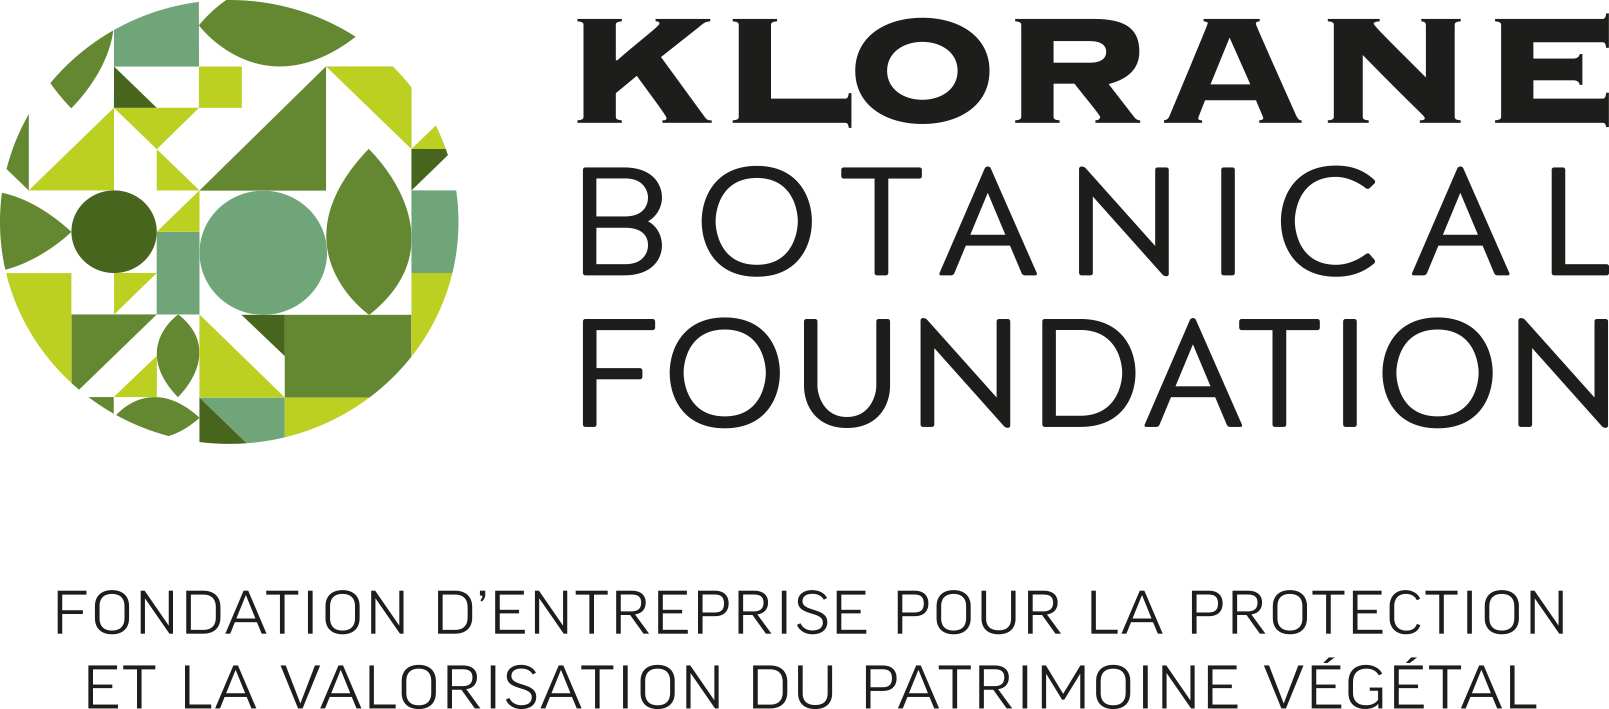 Le Tournesol  Klorane Botanical Foundation